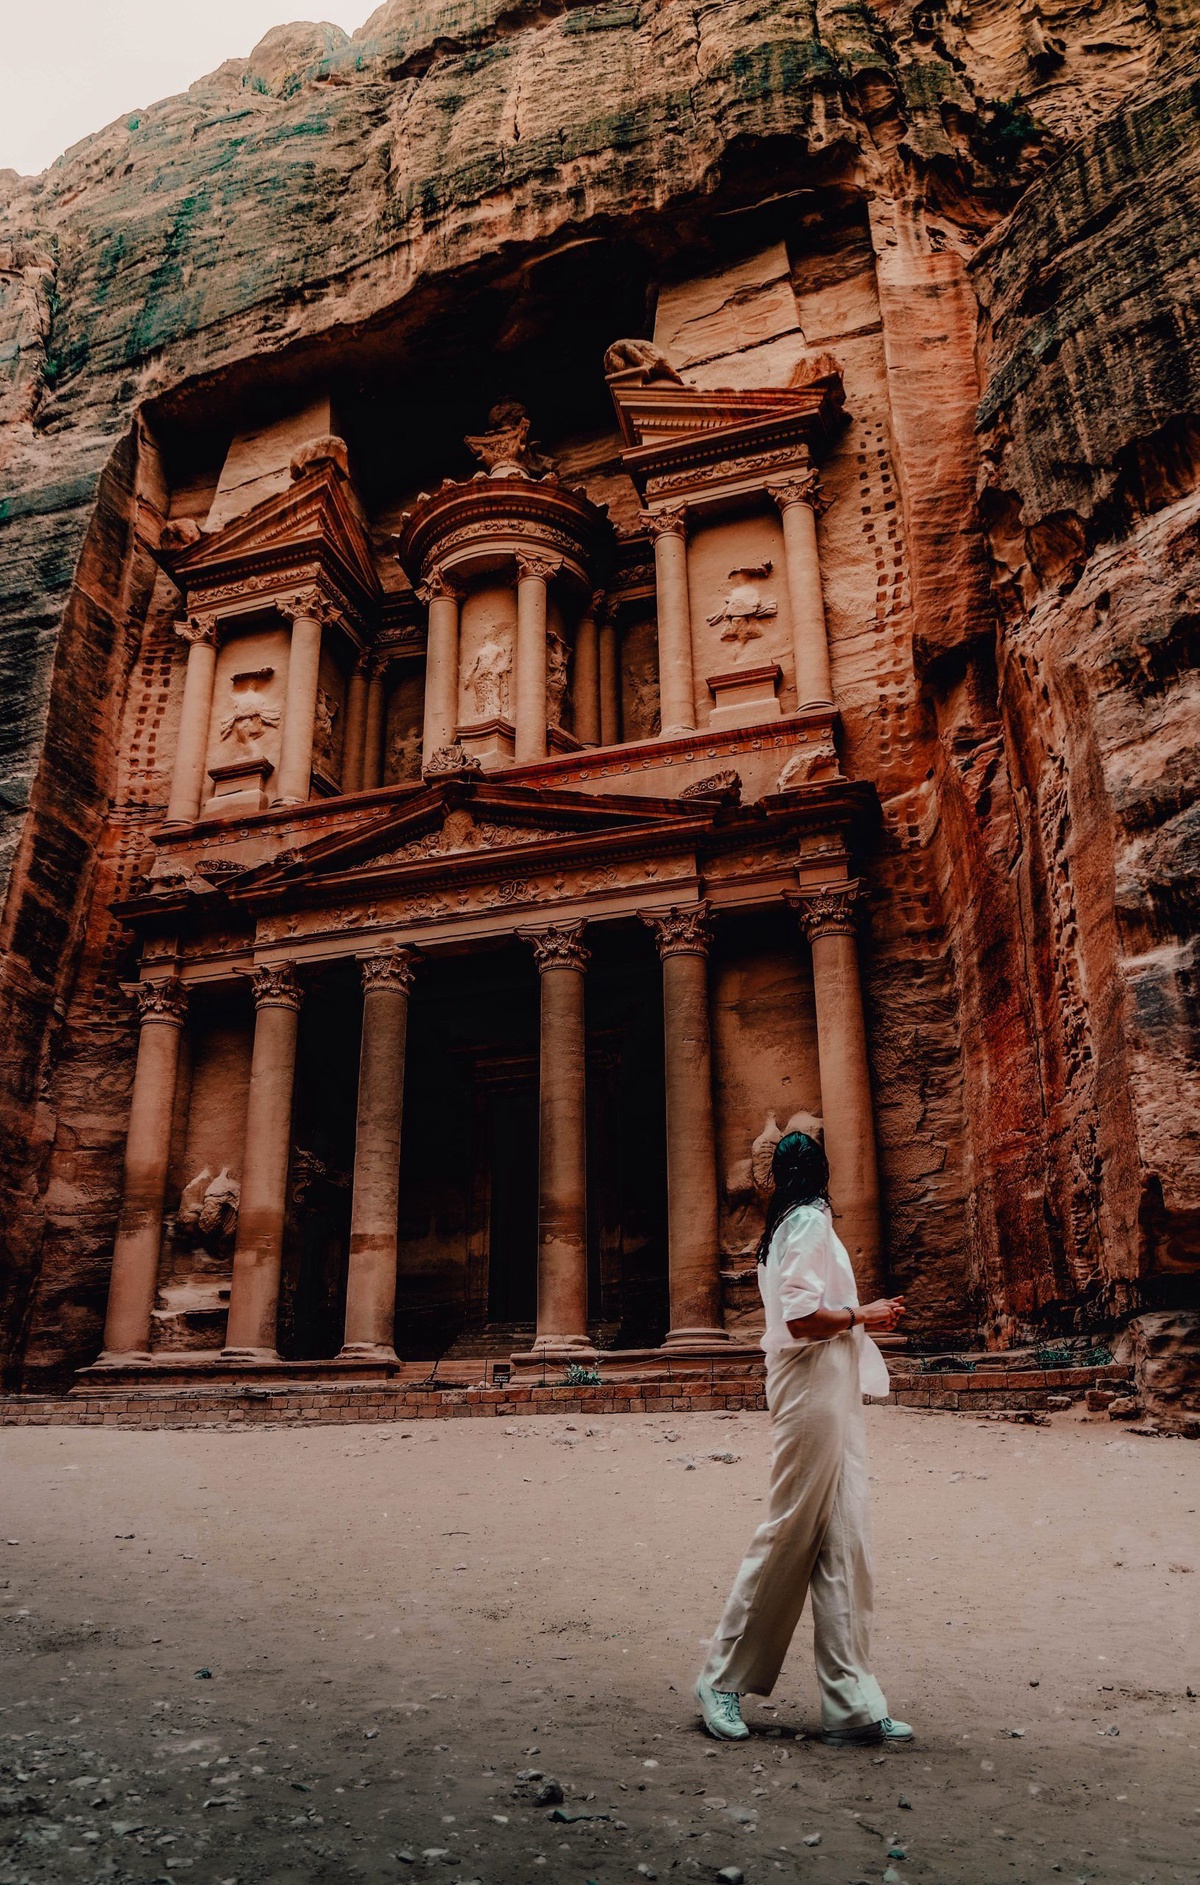 Best attractions in Jordan: keep in your mind